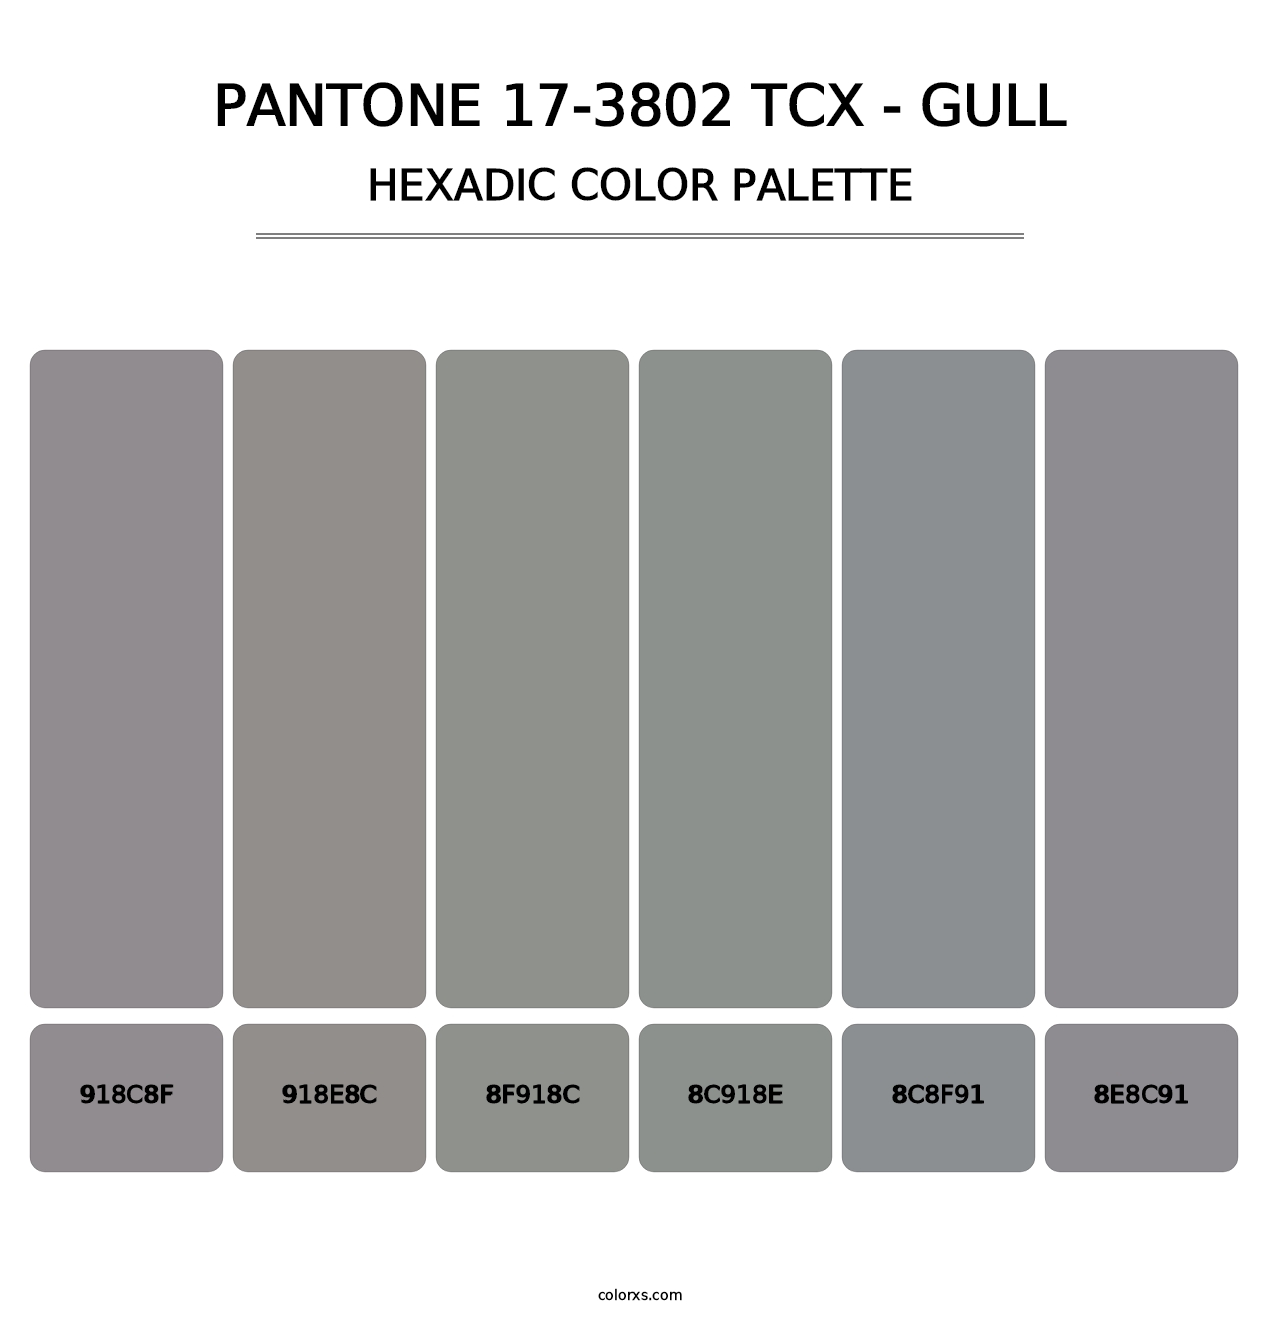 PANTONE 17-3802 TCX - Gull - Hexadic Color Palette